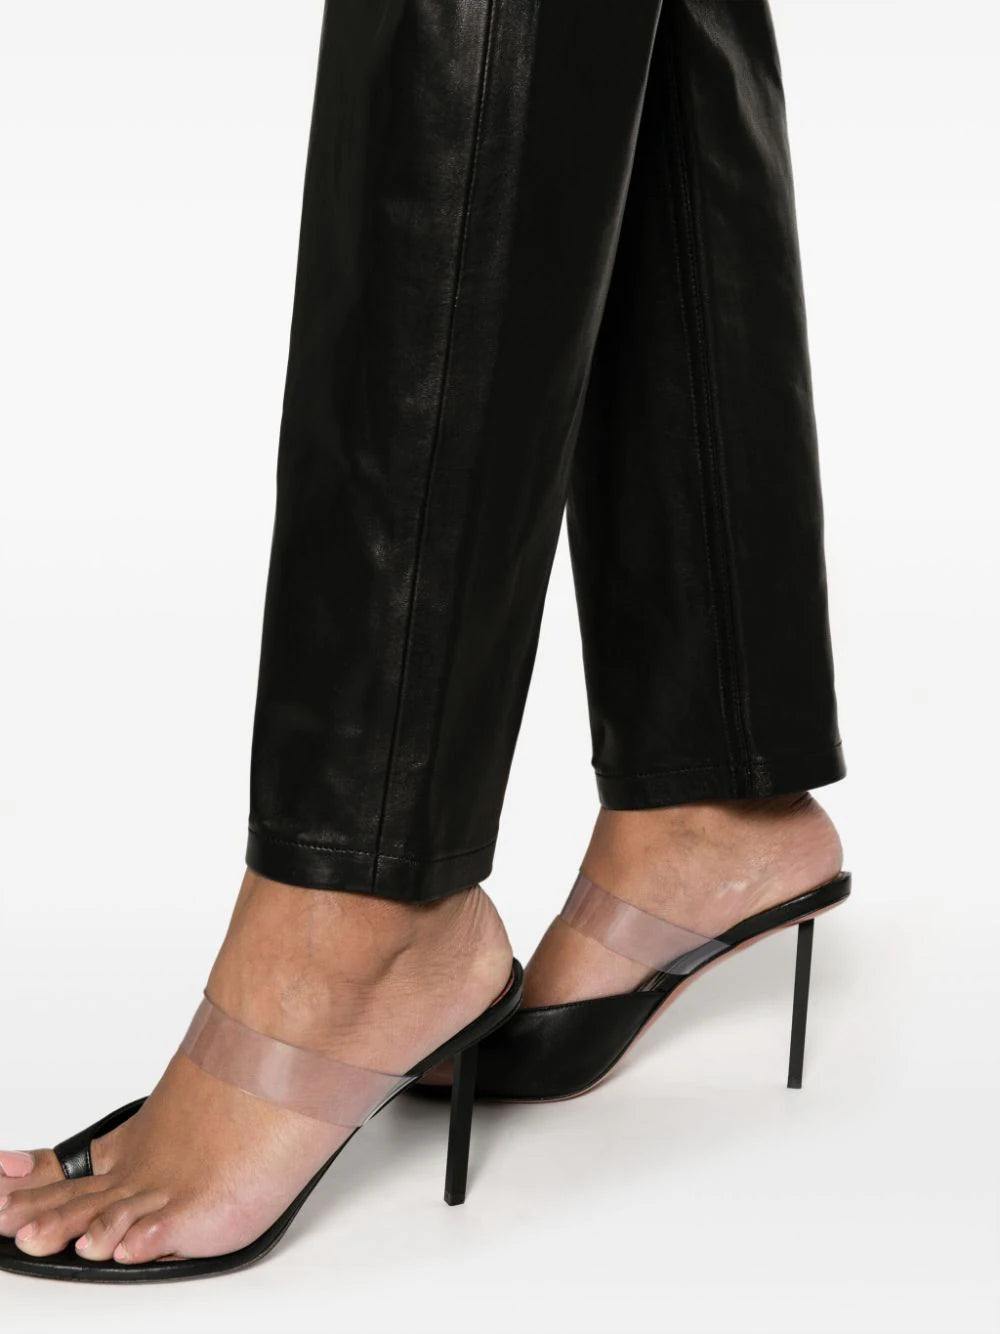 JALIL slim-cut leather trousers, black